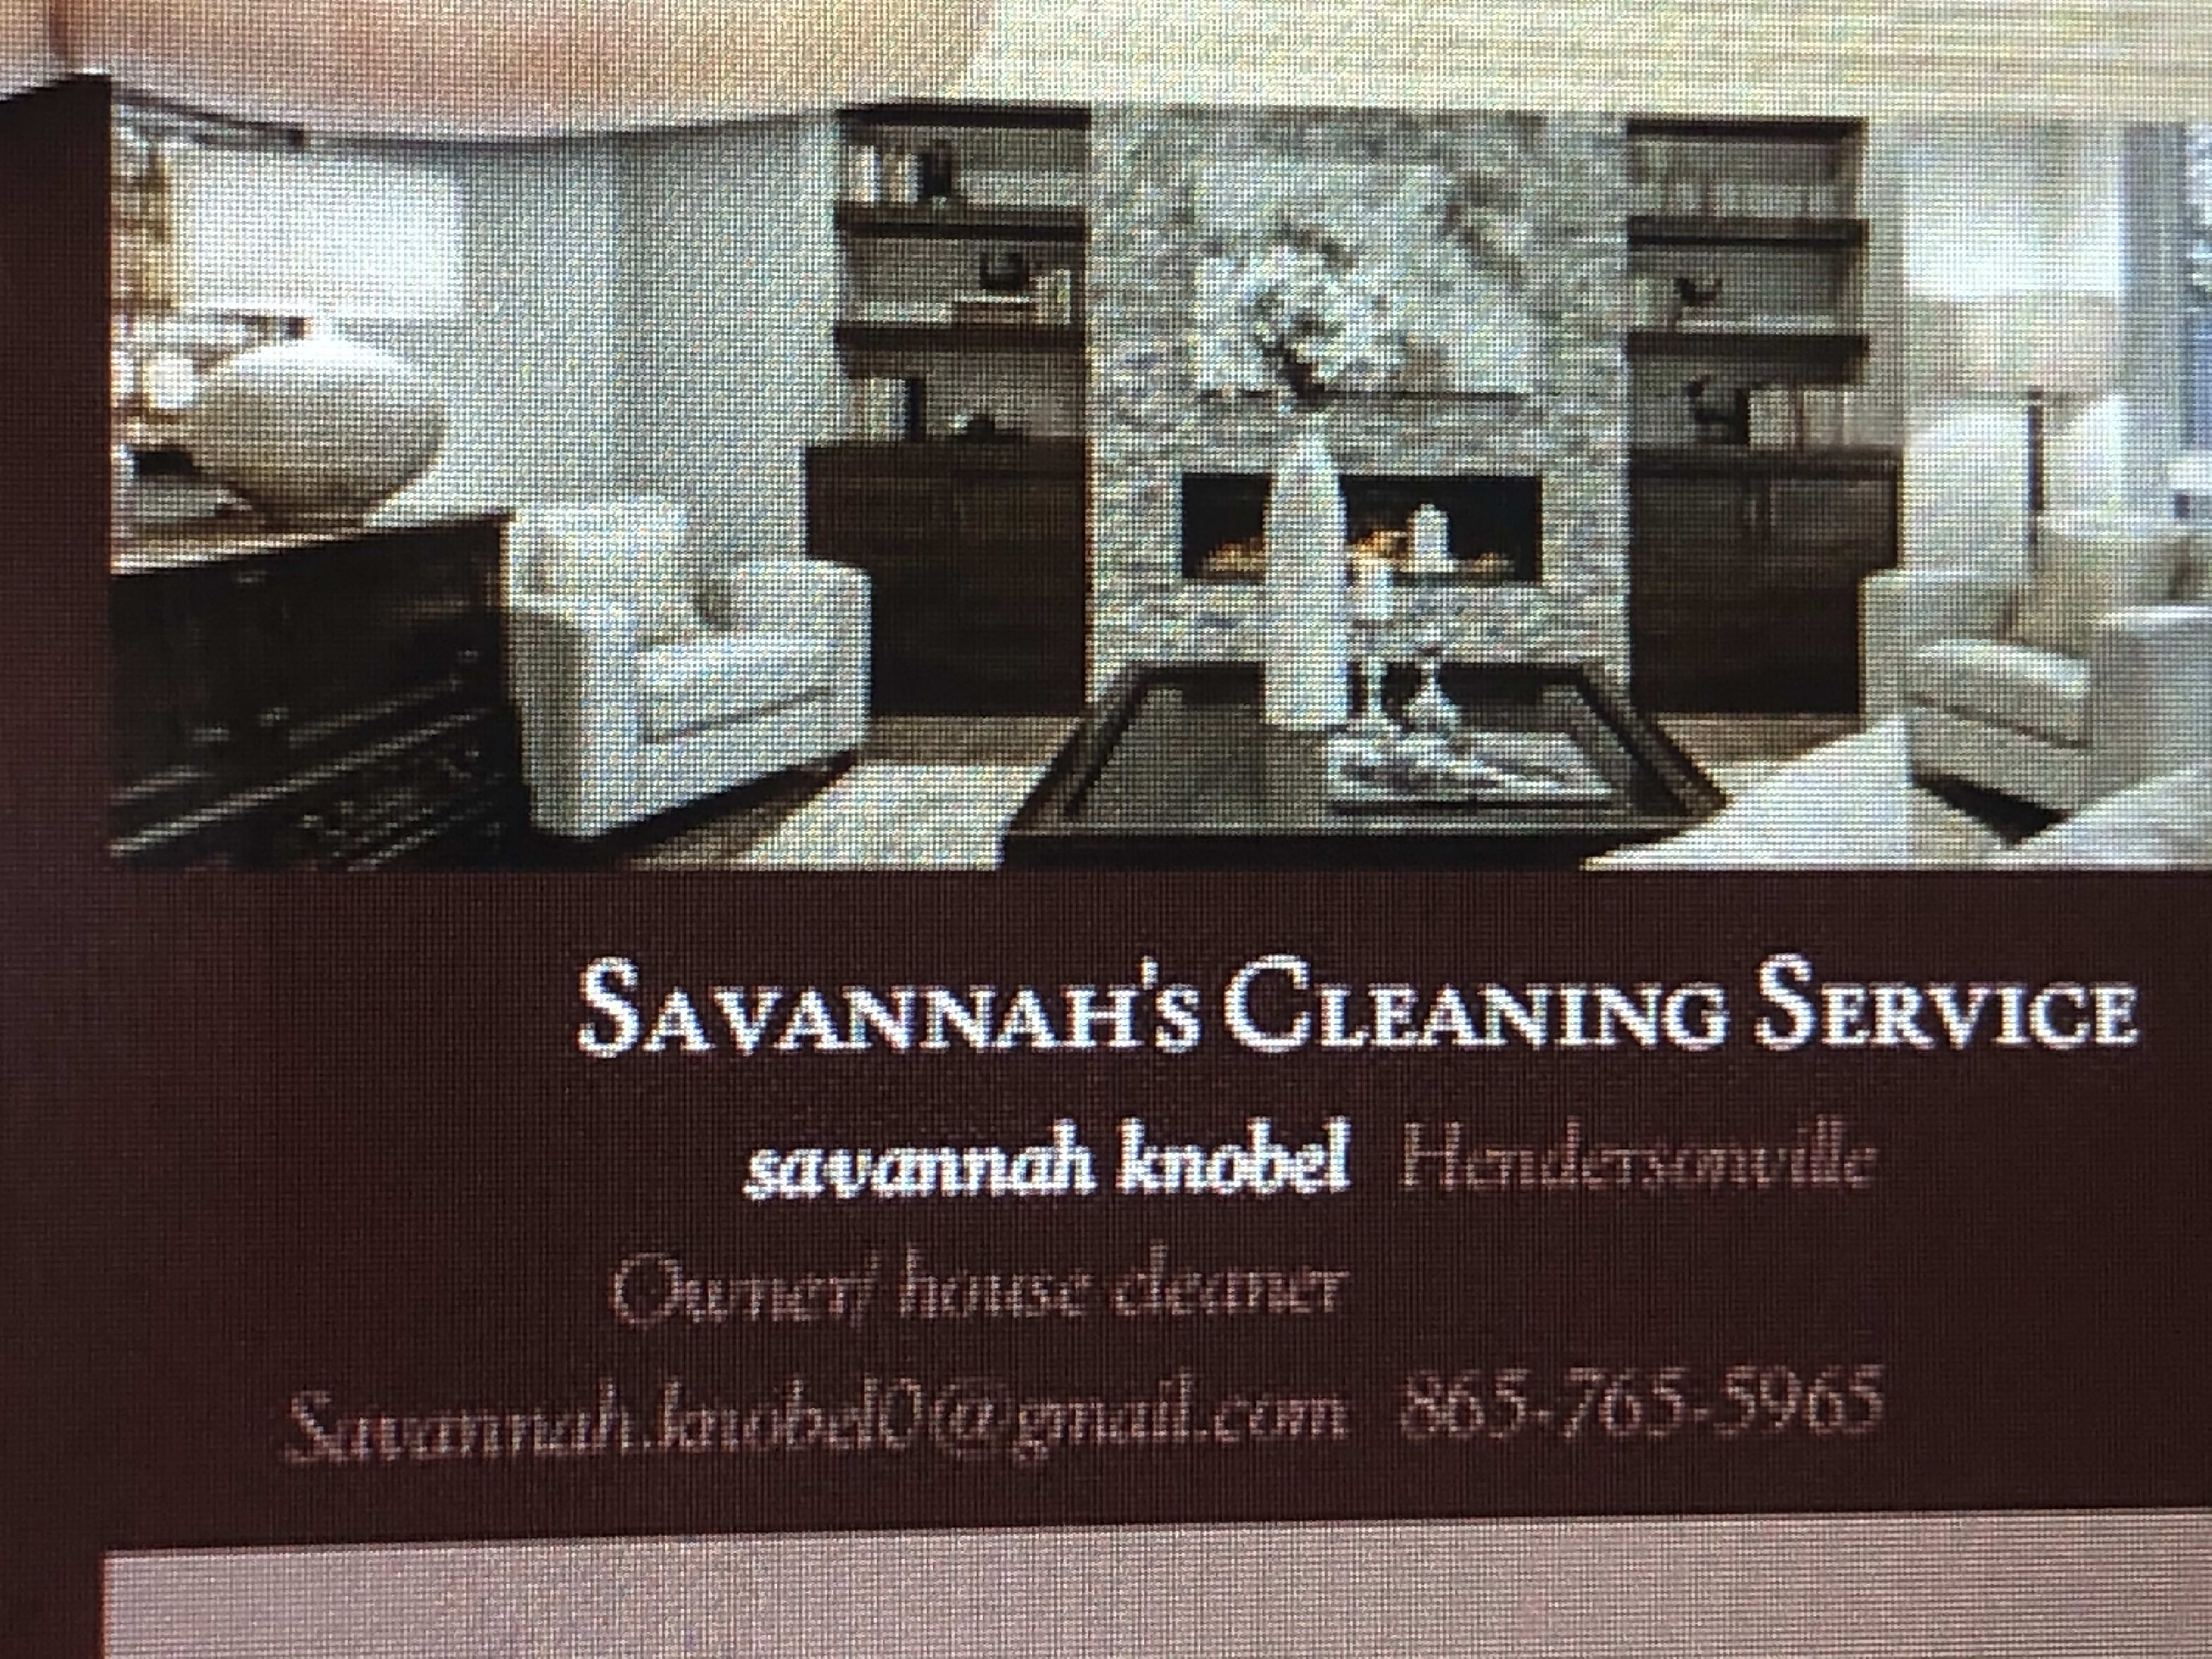 Savannah’s Cleaning Service